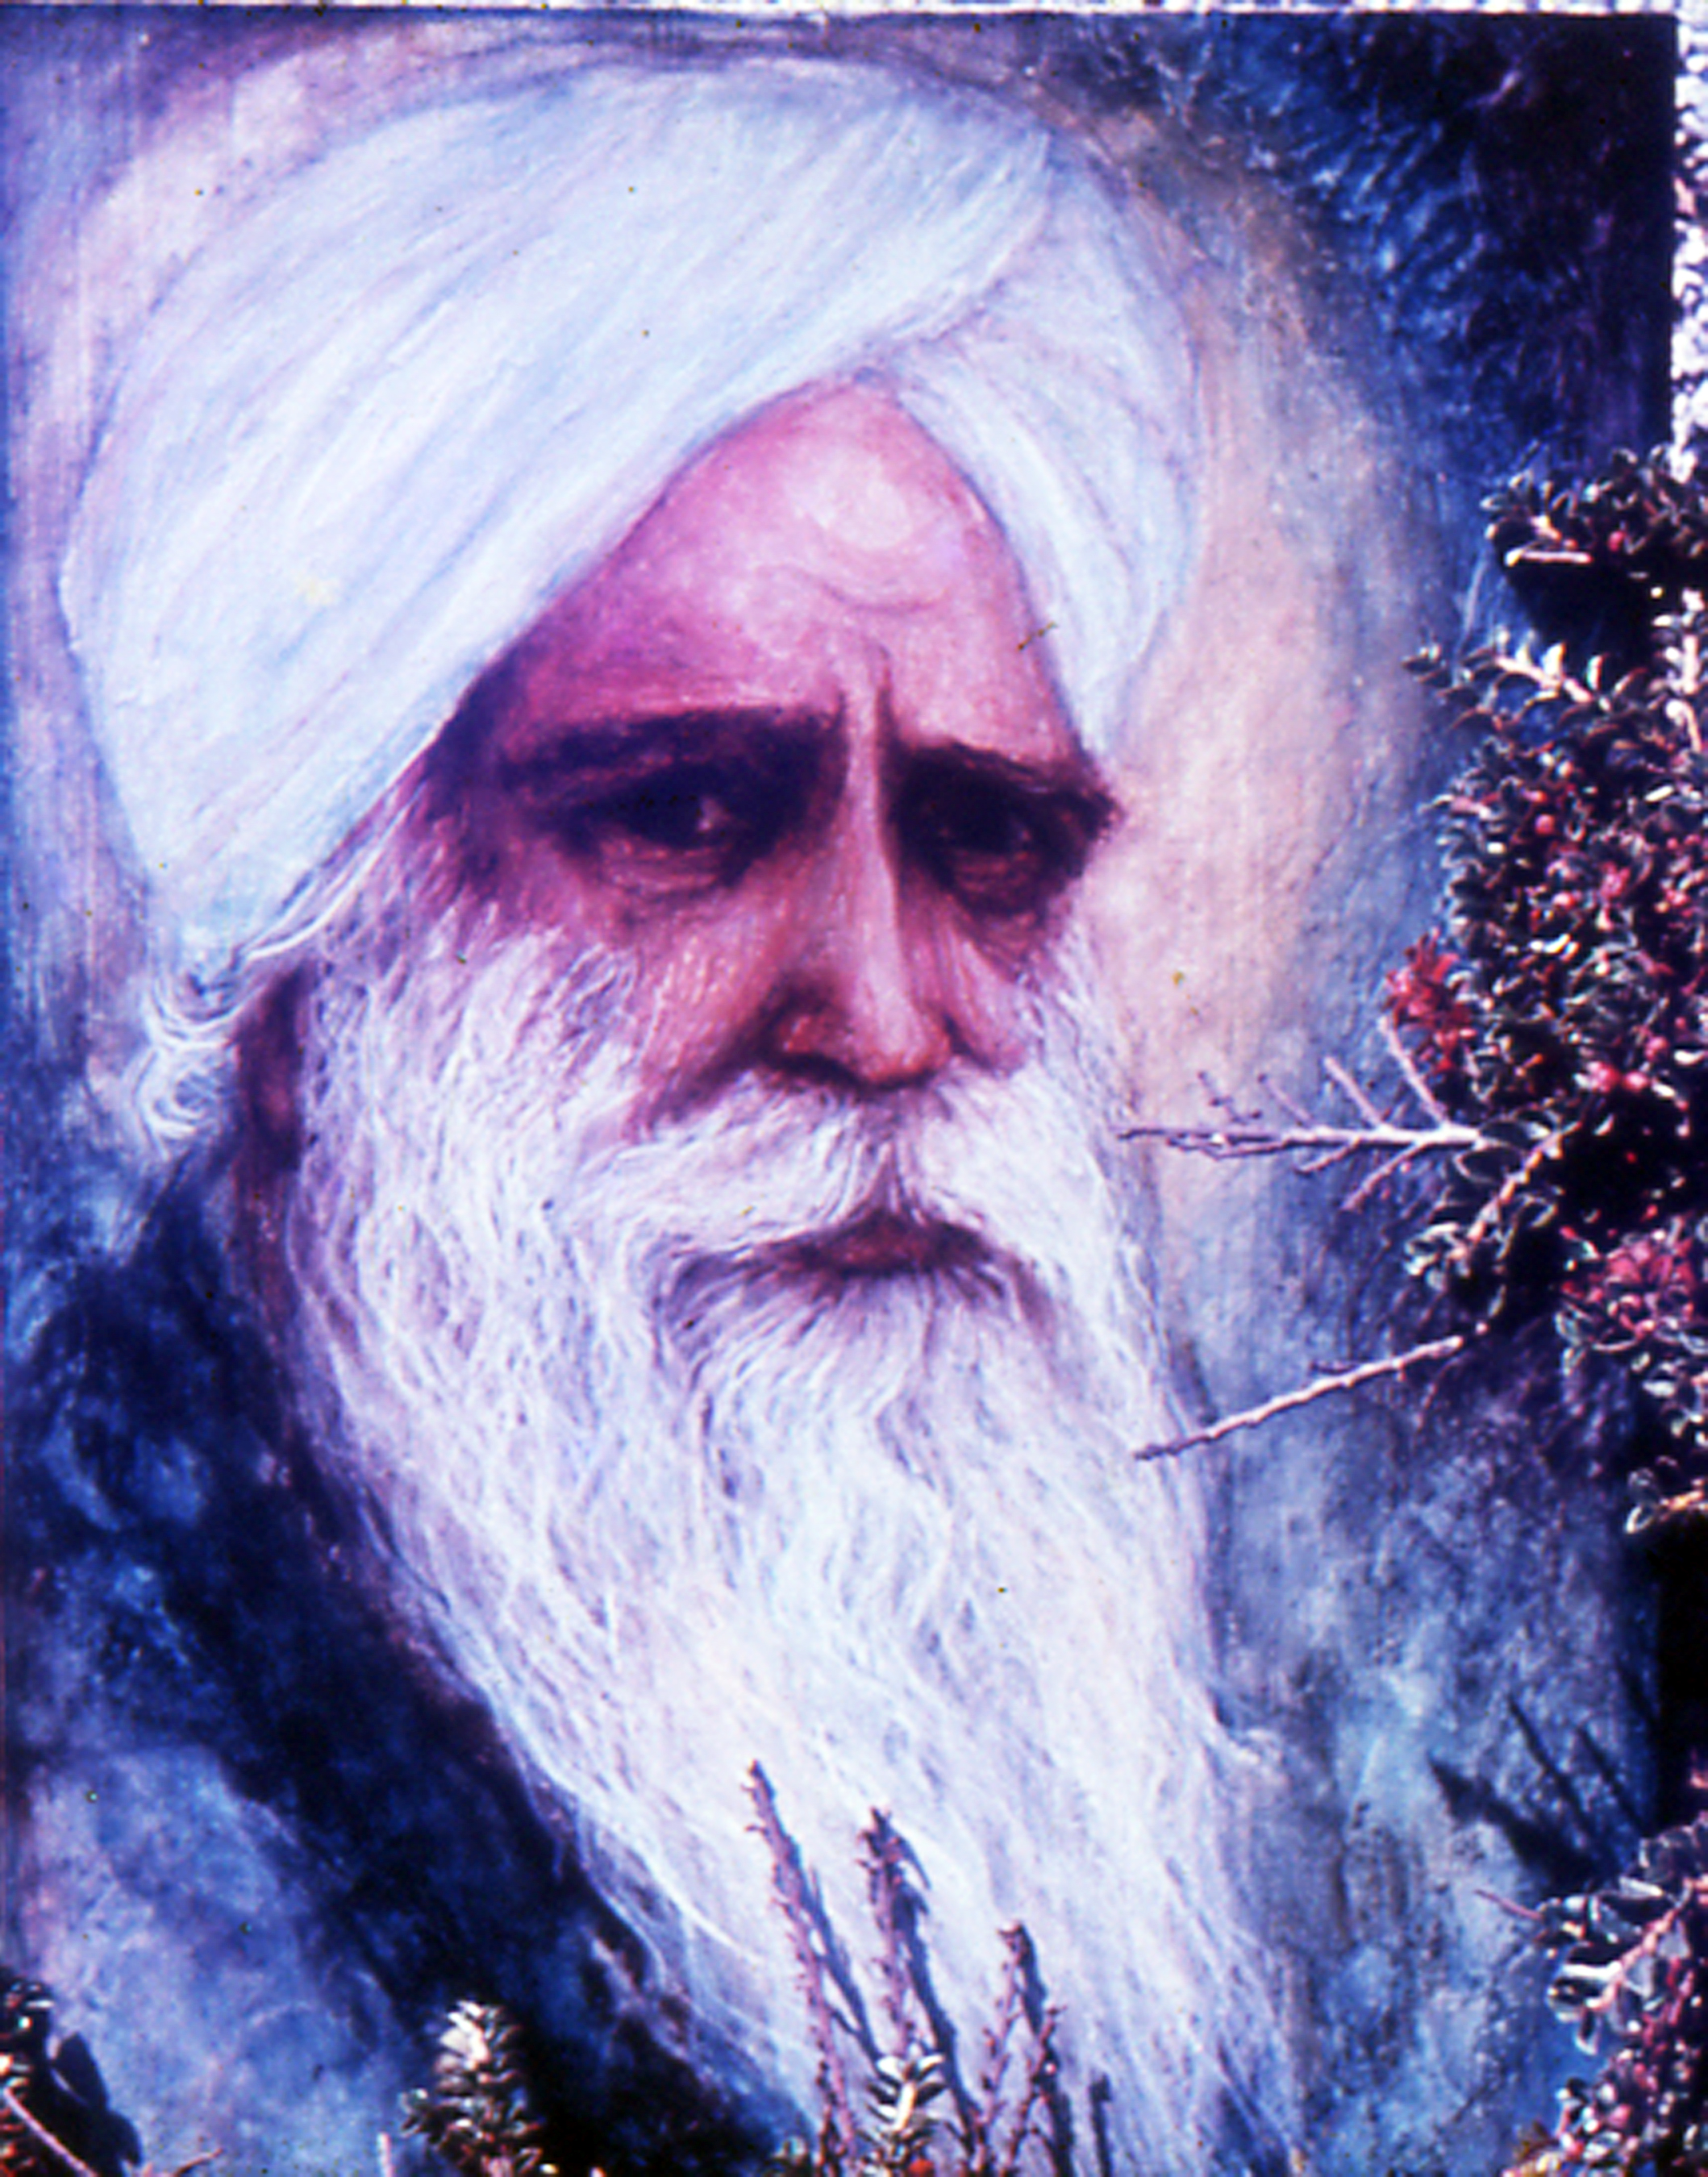 First portrait of Sant Kirpal Singh Ji Maharaj by Arran